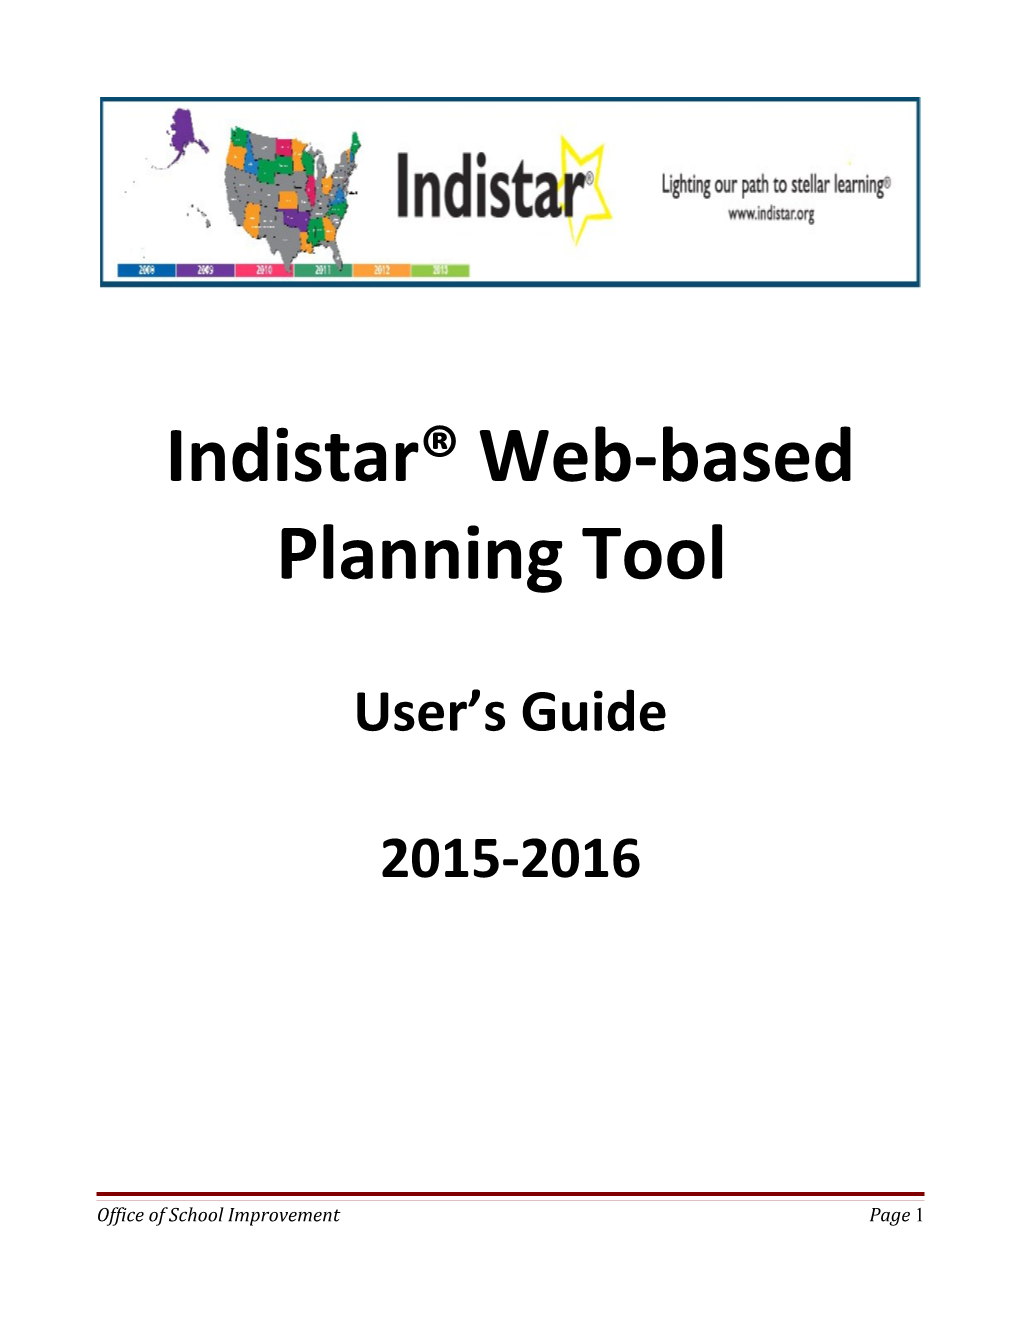 Indistar Web-Based Planning Tool